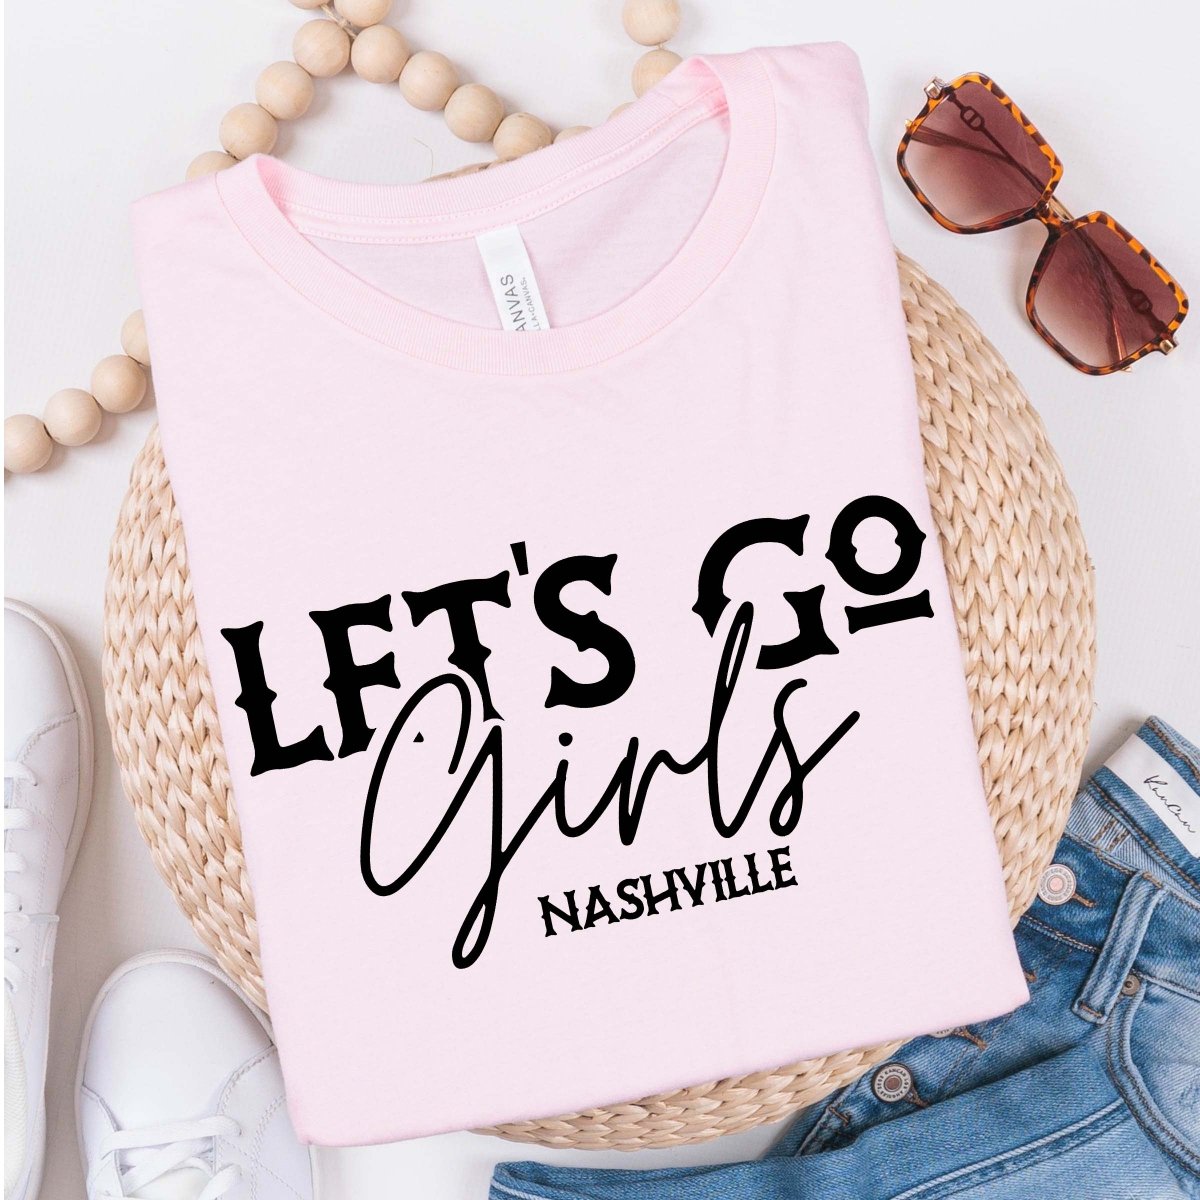 Lets go Girls Nashville Tee - Limeberry Designs